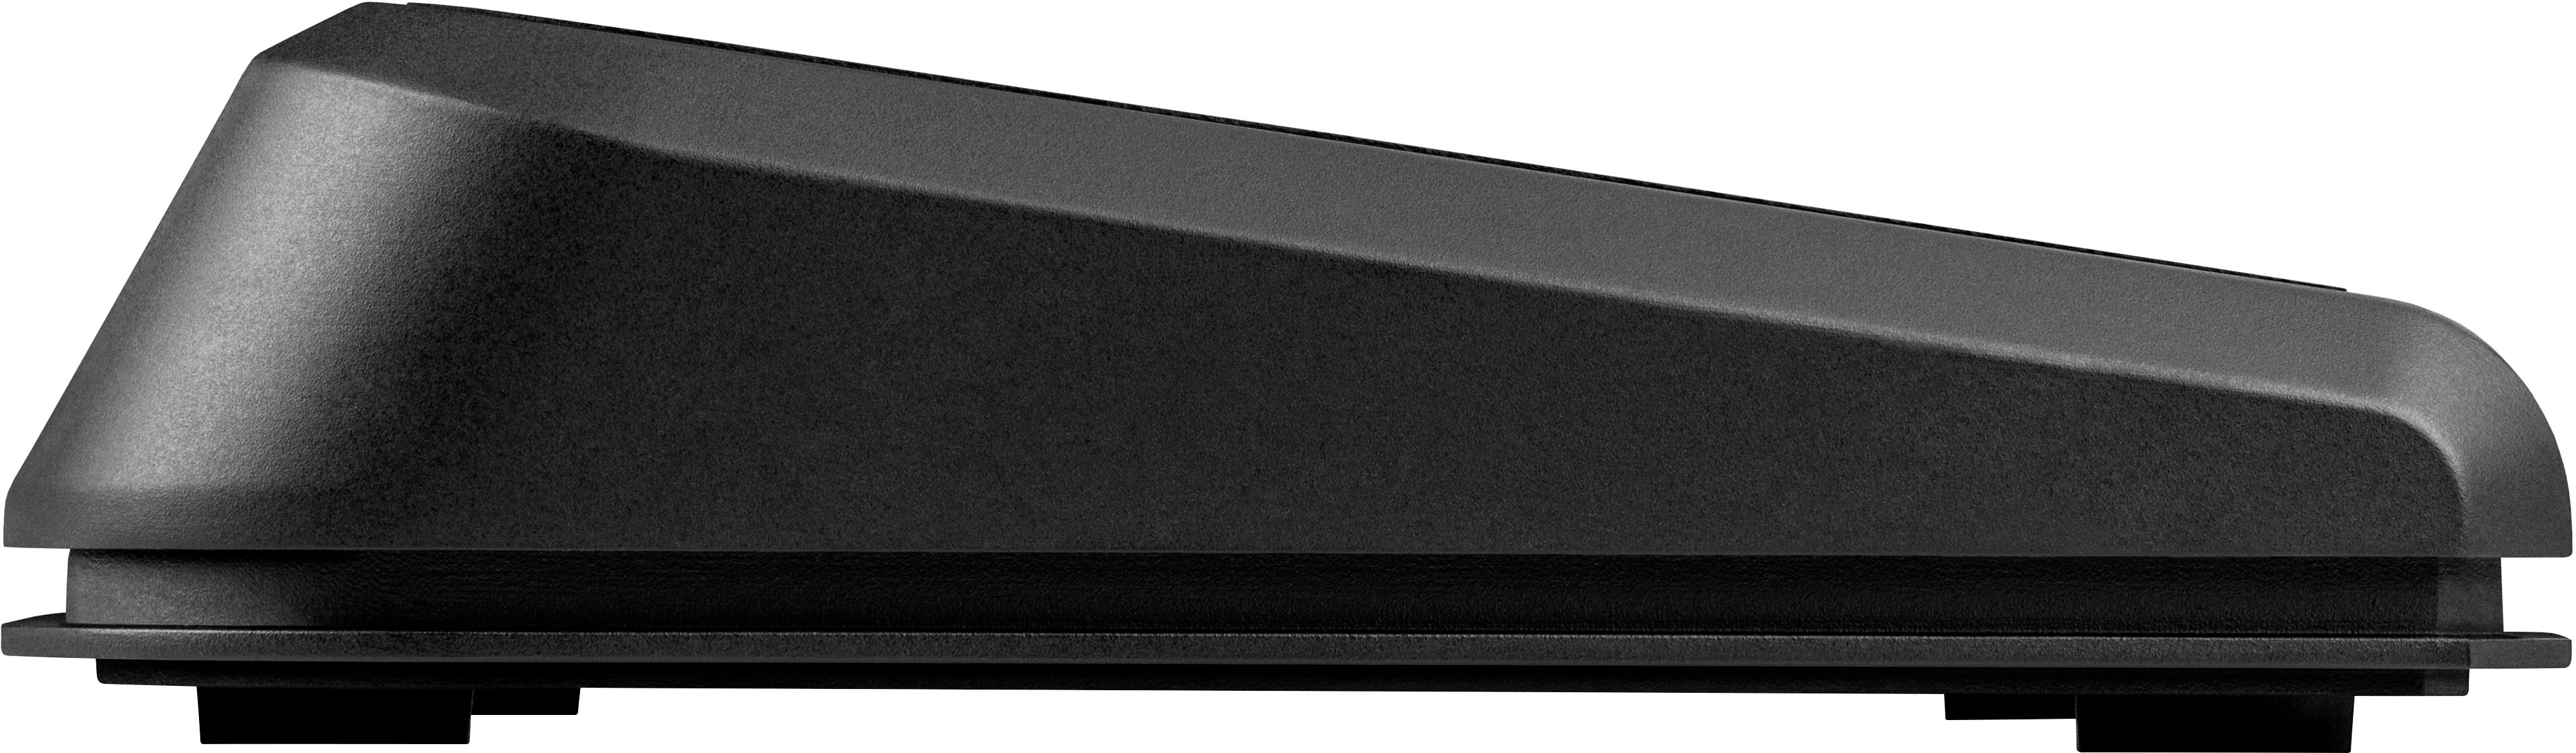 Elgato 10GAA9901 Full-size Wired Mechanical USB Keypad with Stream Deck  Black 10GAA9901 - Best Buy